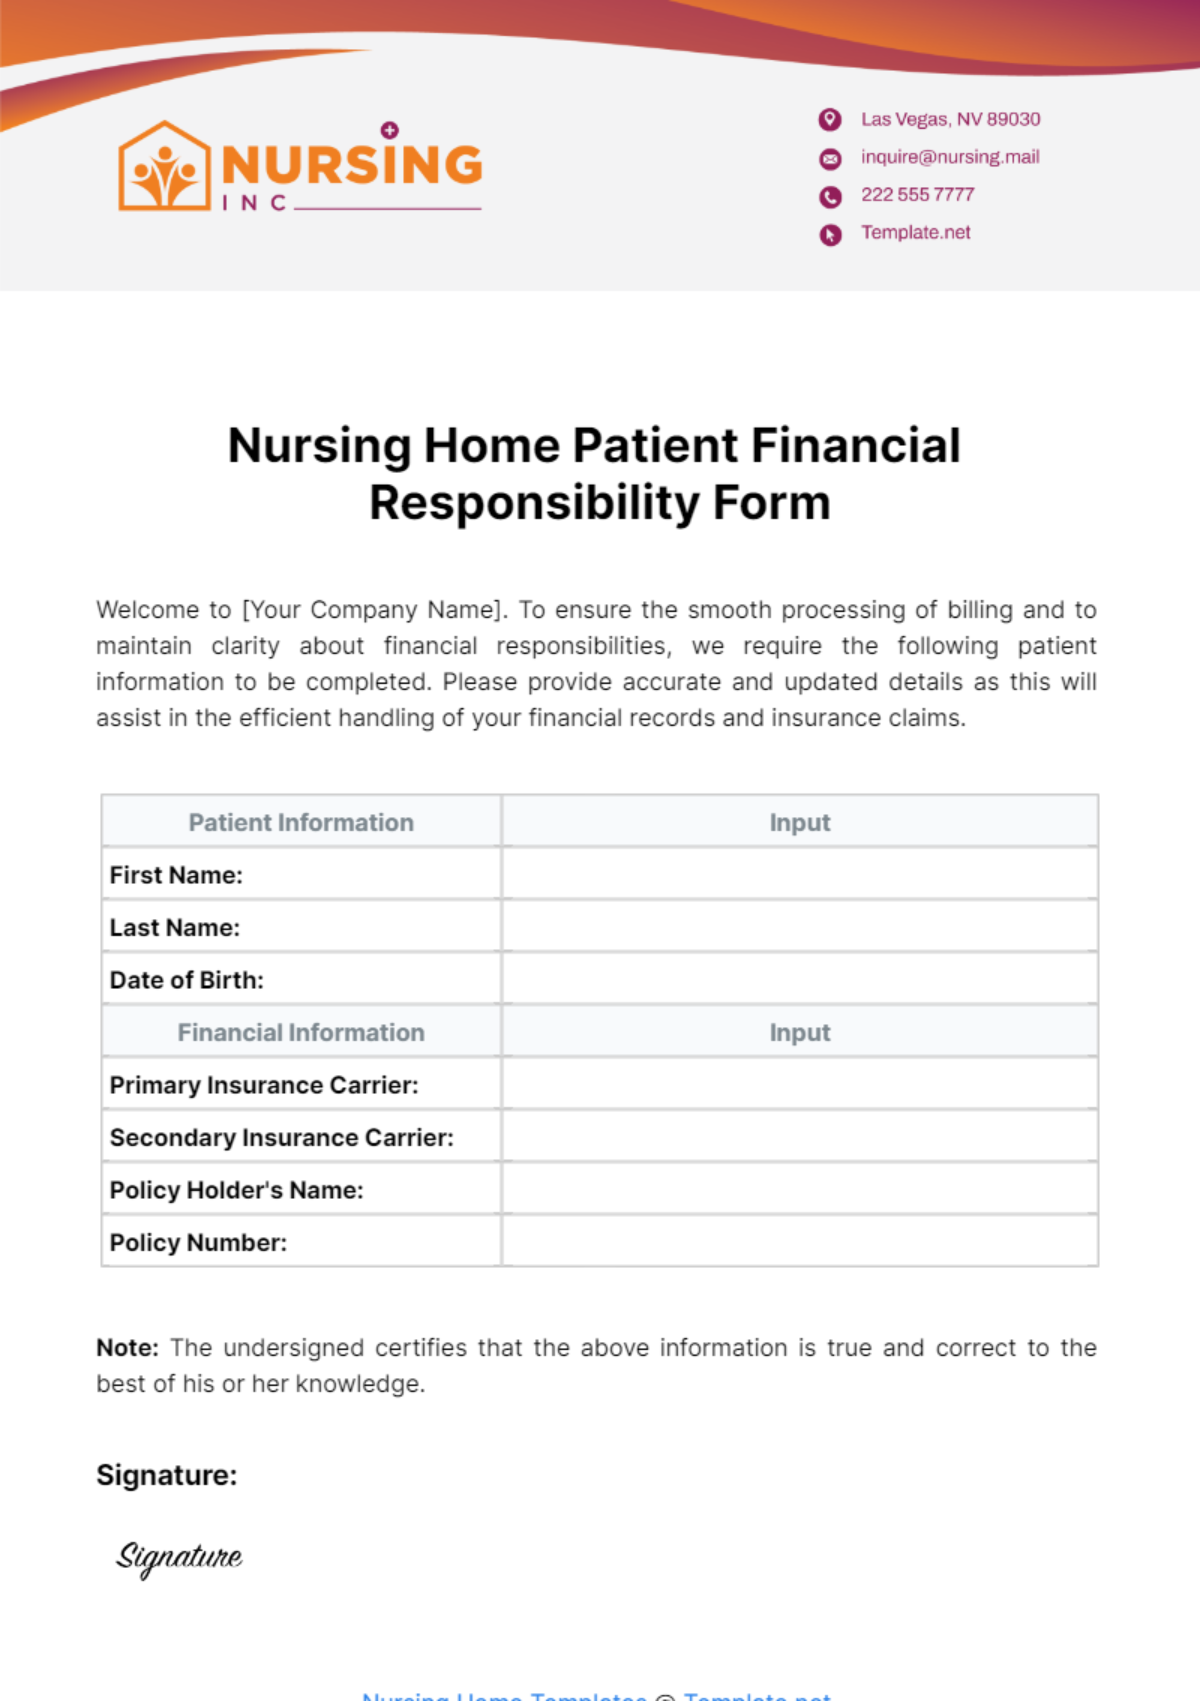 Nursing Home Patient Financial Responsibility Form Template